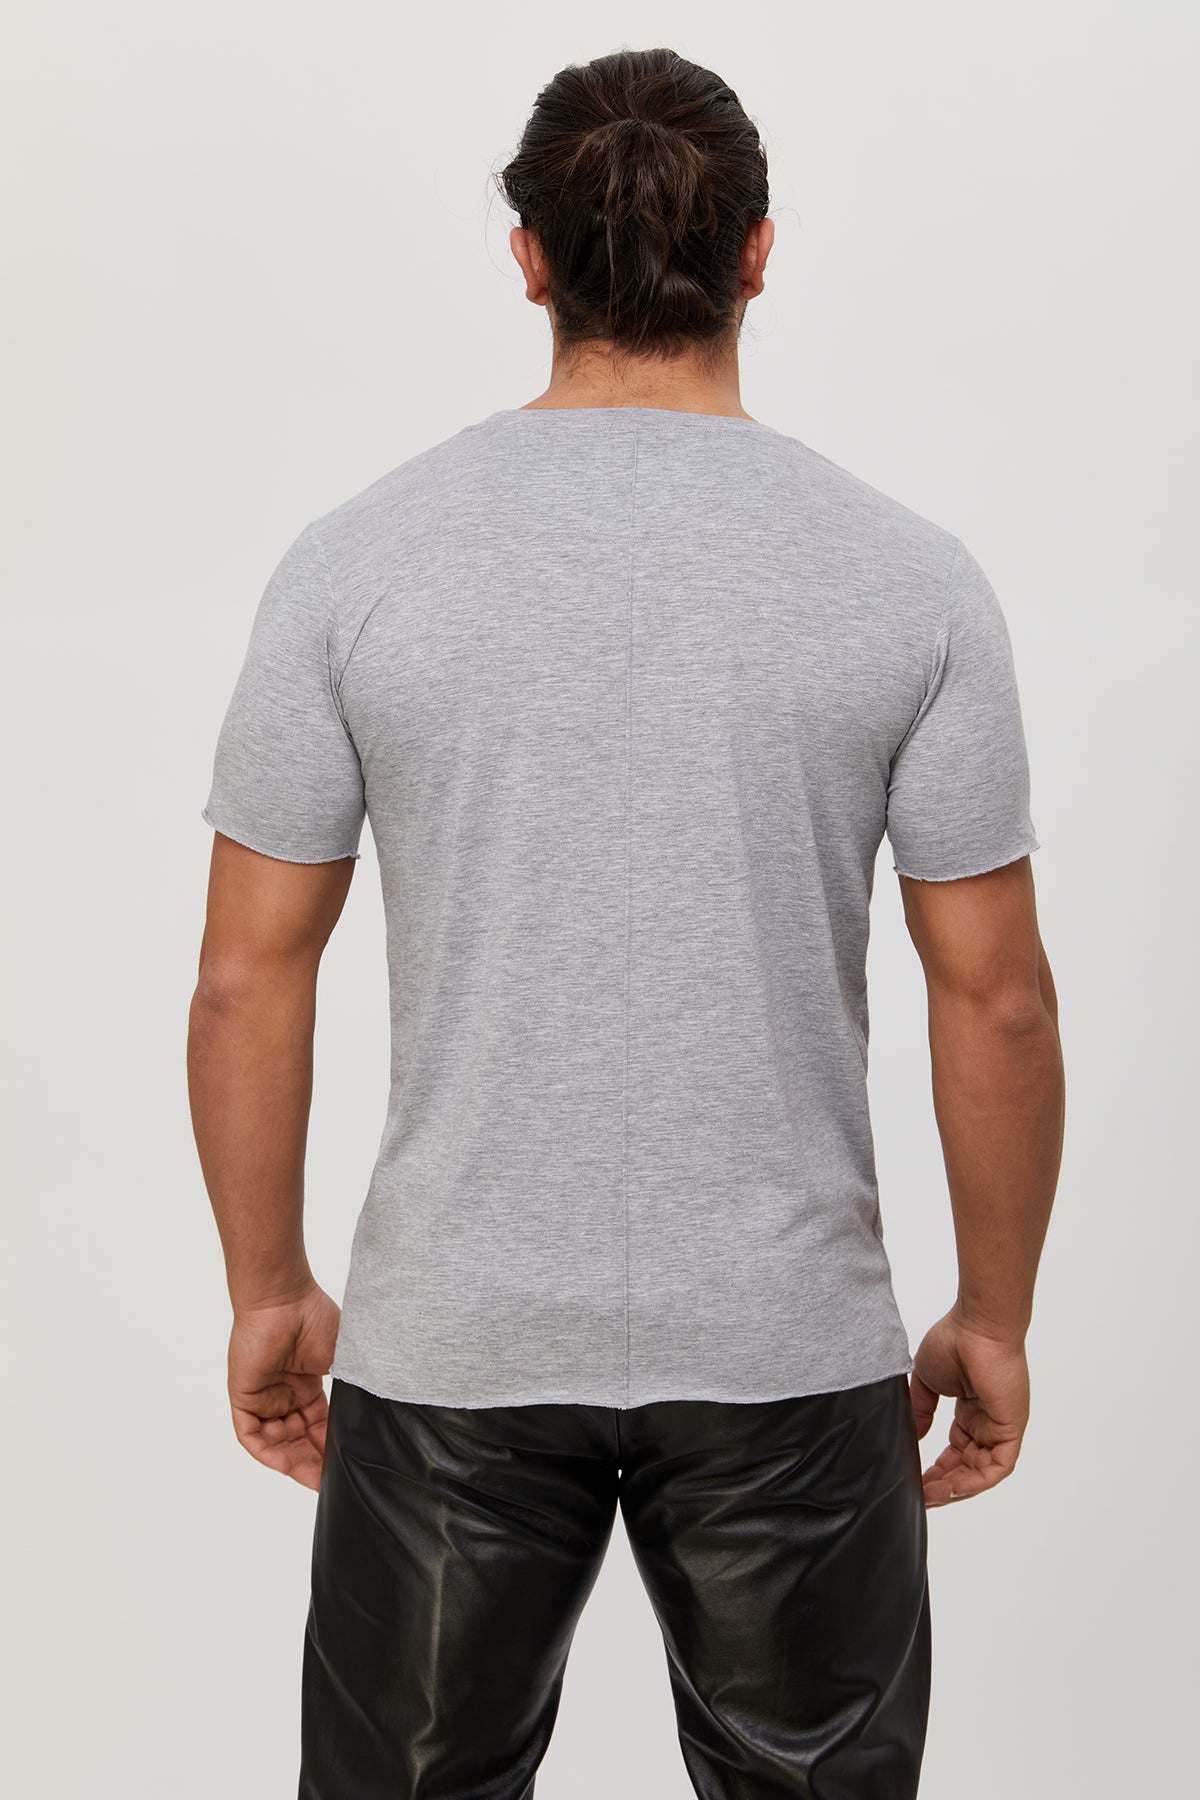 Men's T-shirts-Tops-Tees. 100 % Quality Turkish Pima cotton. Stylish, luxury. Big Winter Sale.